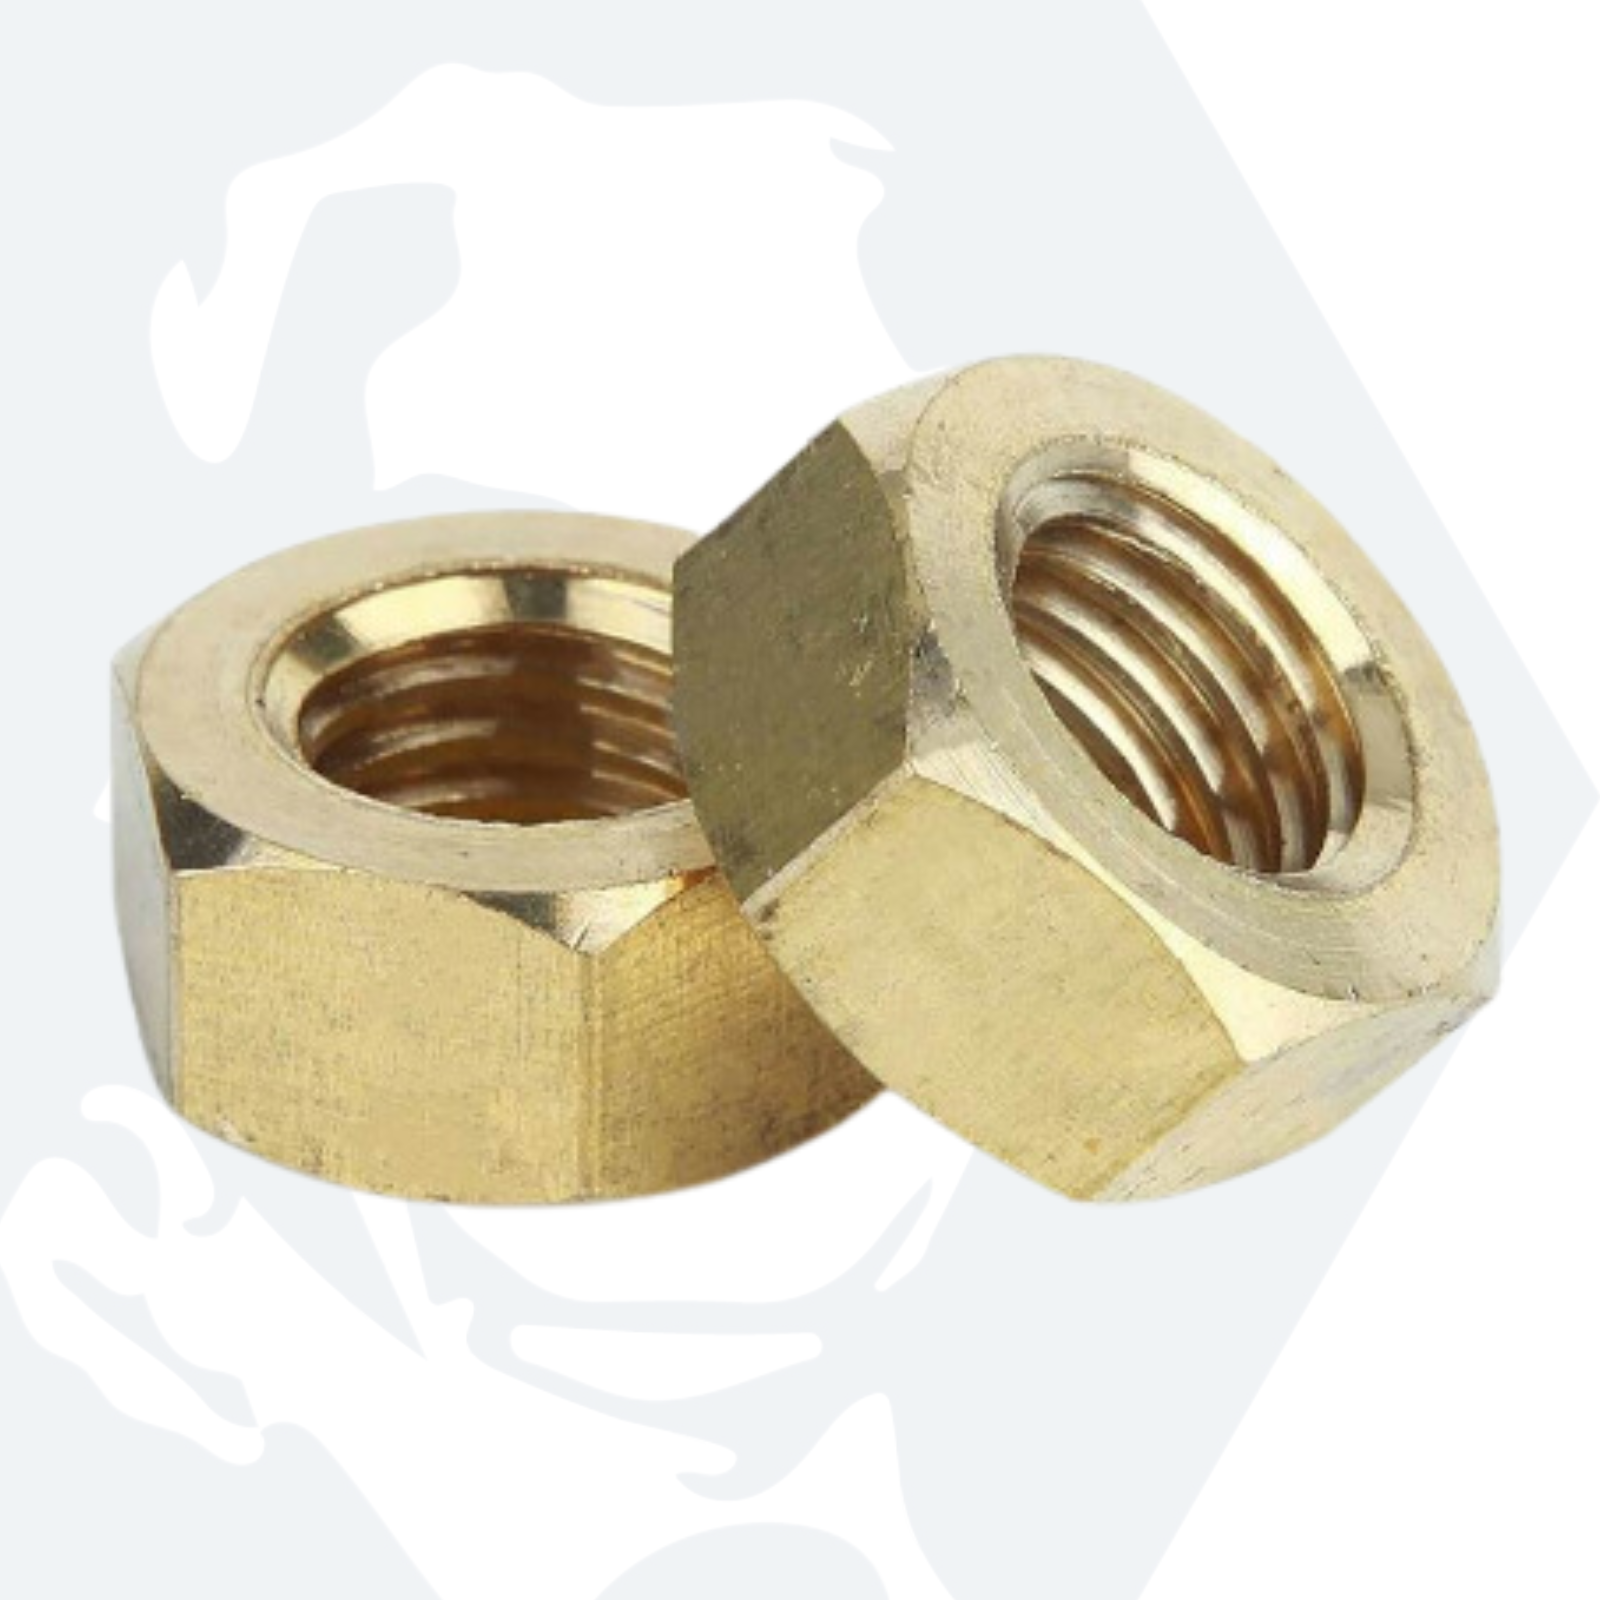 M10 Hexagon Nuts (DIN 934) - Brass